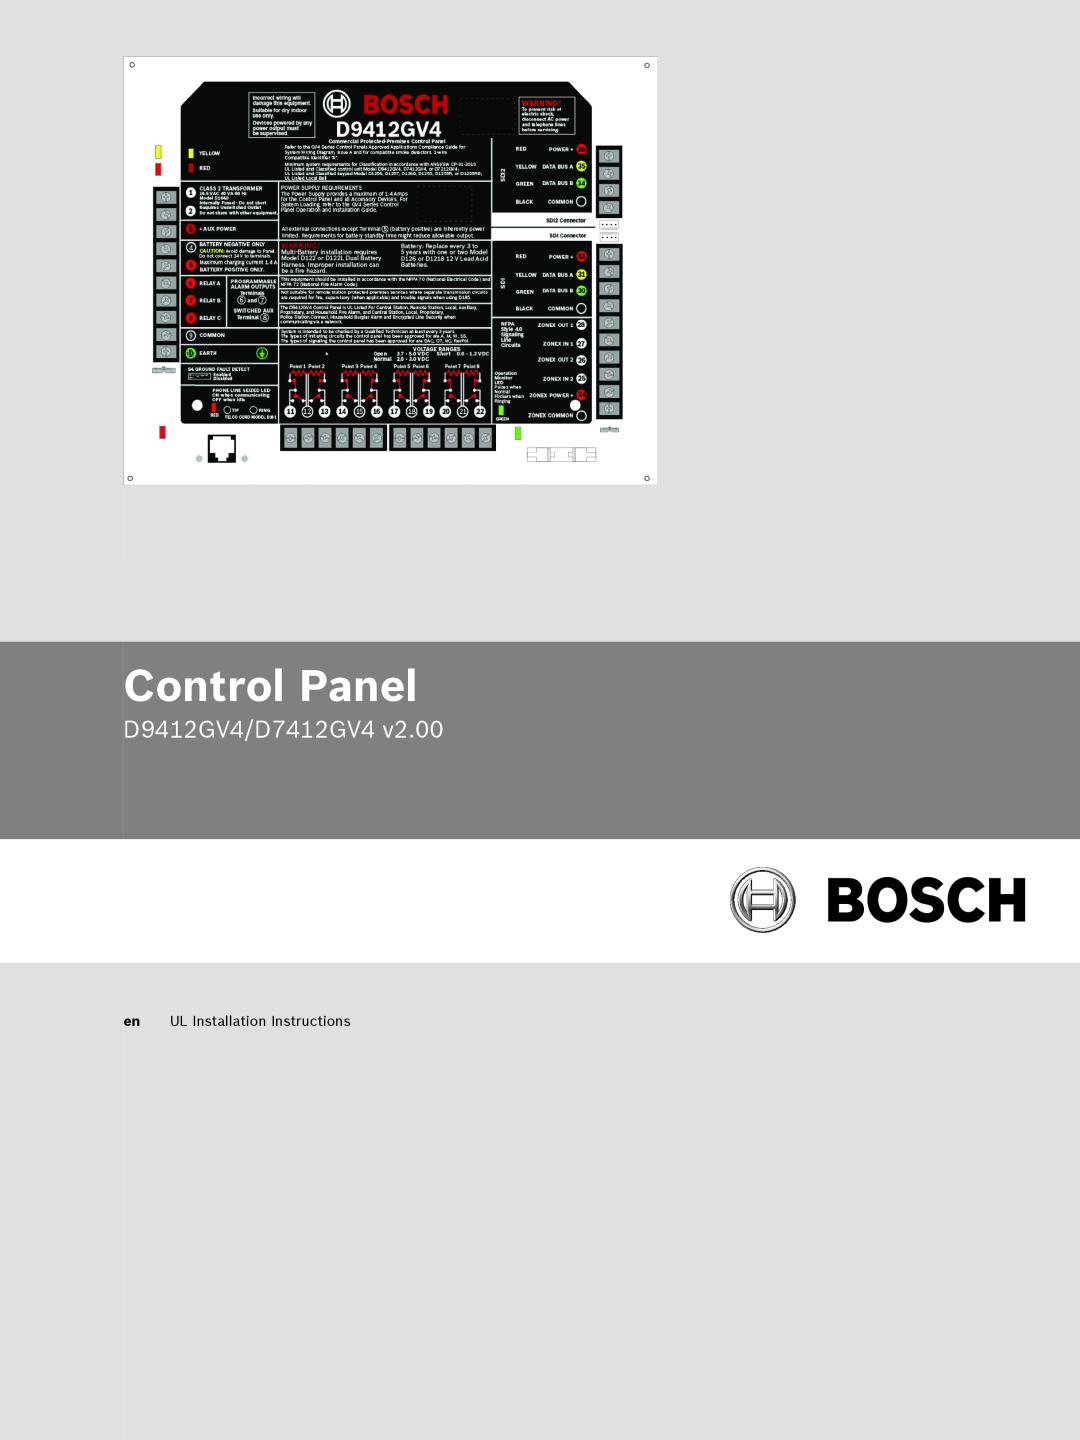 Bosch Appliances installation instructions Control Panel, D9412GV4/D7412GV4, en UL Installation Instructions 